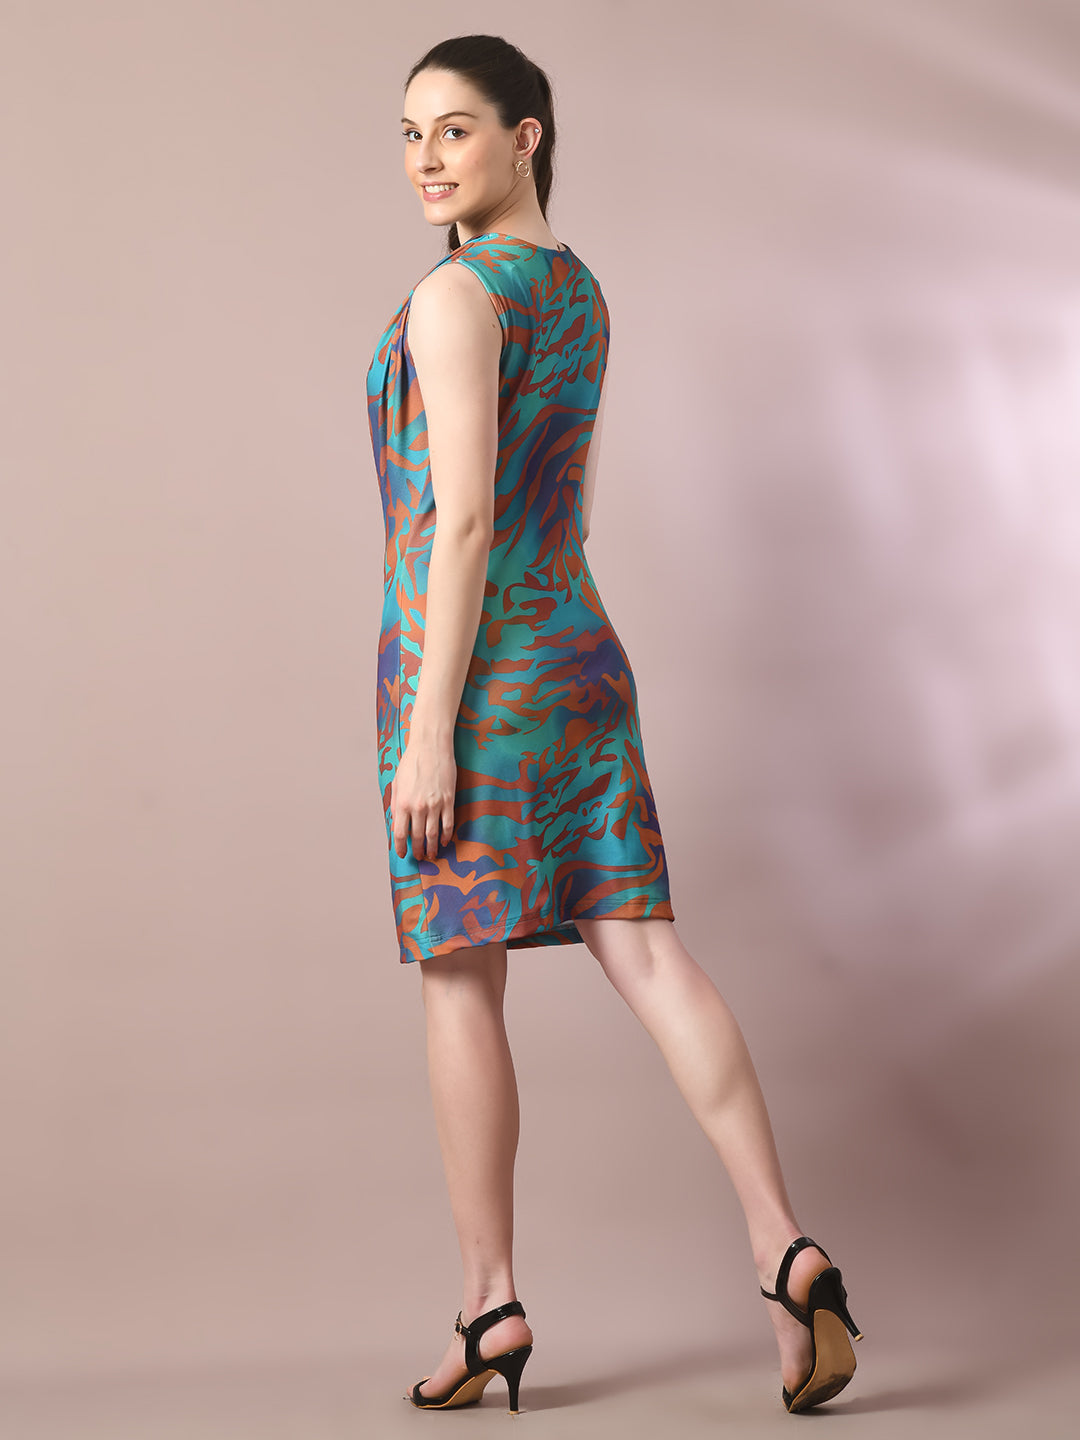 Women's  Multi Printed Cowl Neck Bodycon Party Dress  - Myshka